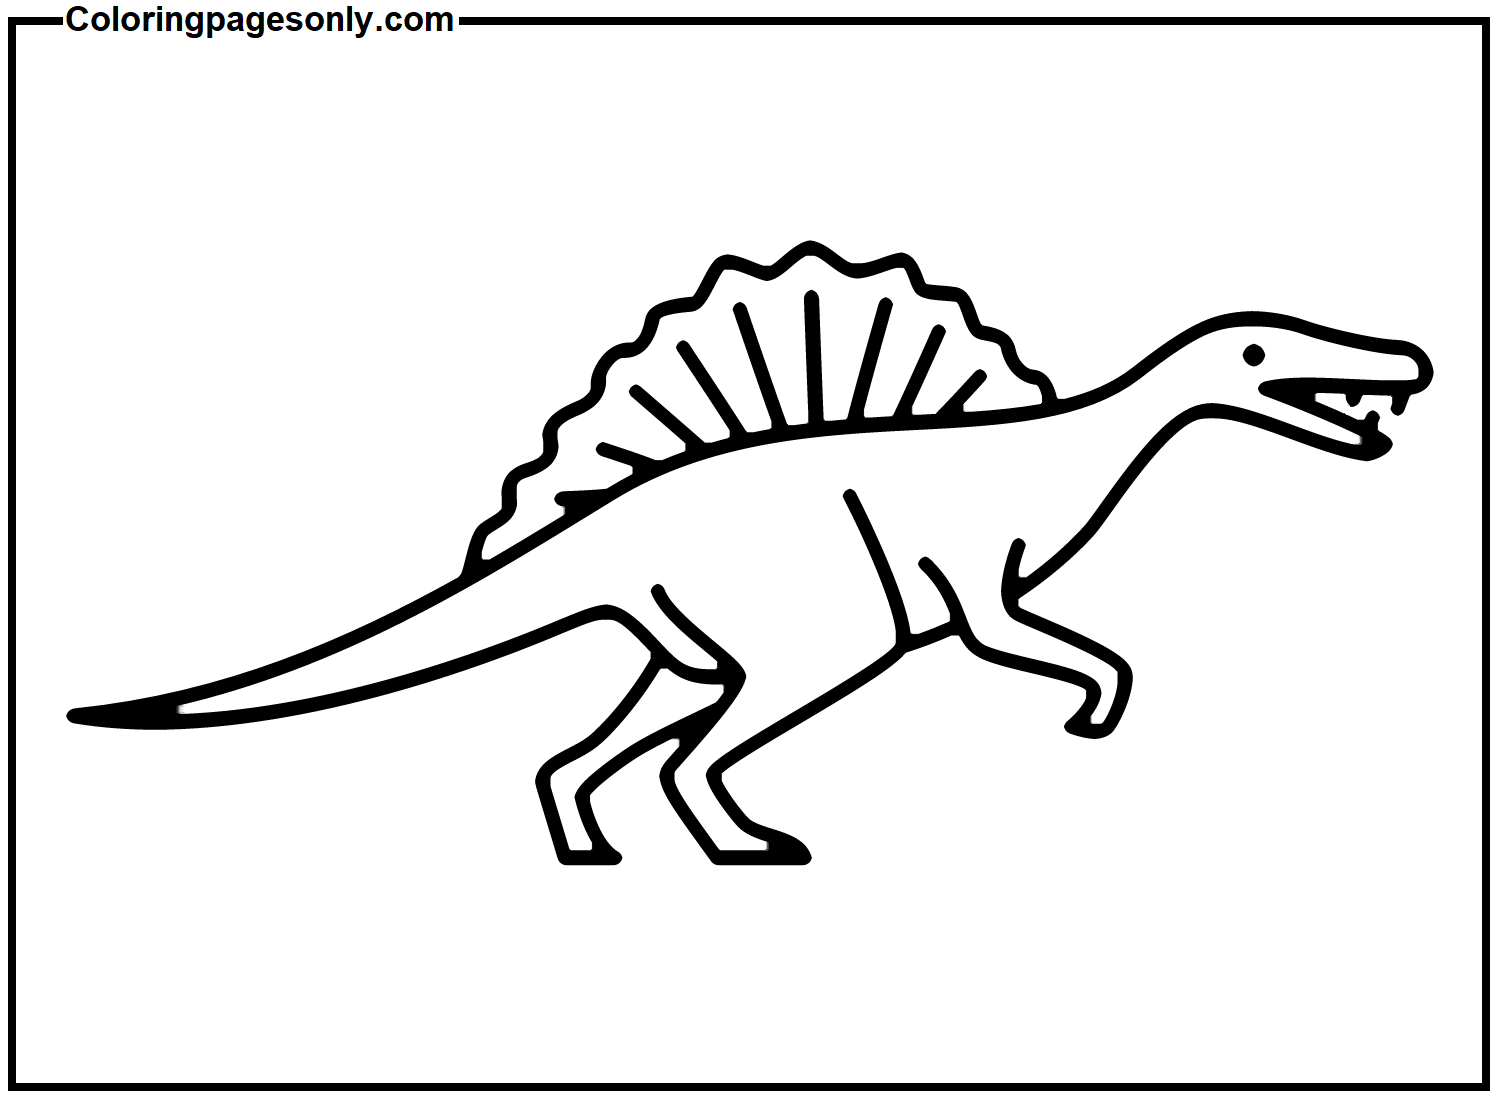 Spinosaurus imprimible de Spinosaurus